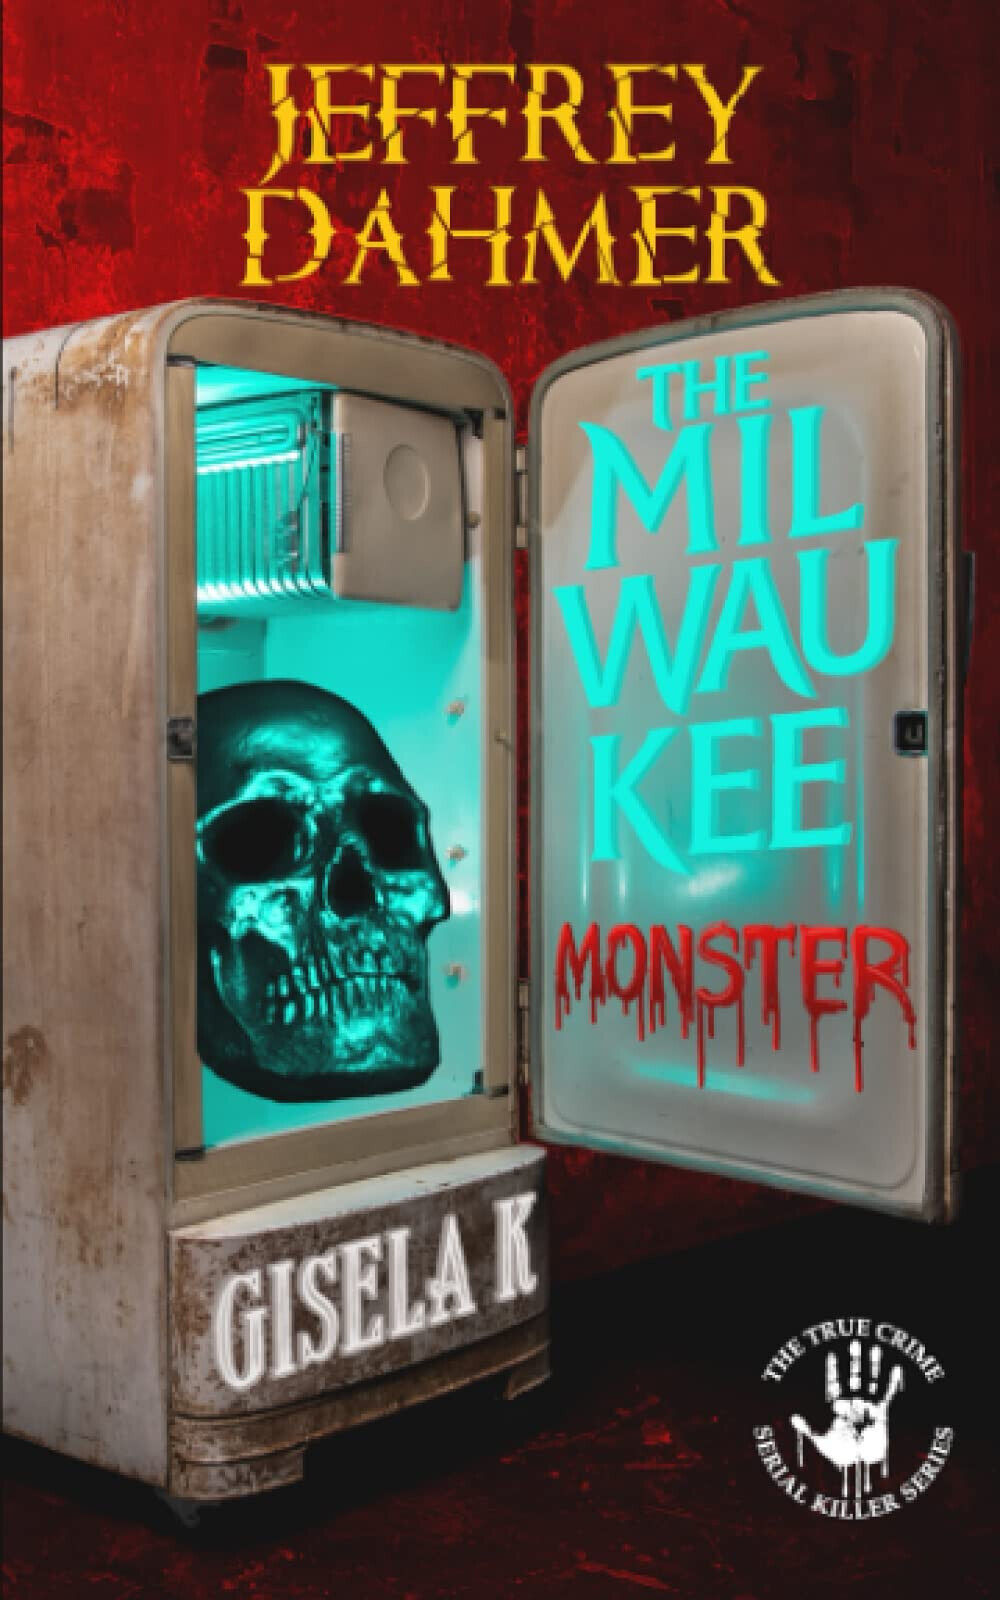 Jeffrey Dahmer: The Milwaukee Monster - Gisela K. - Independently published,2020